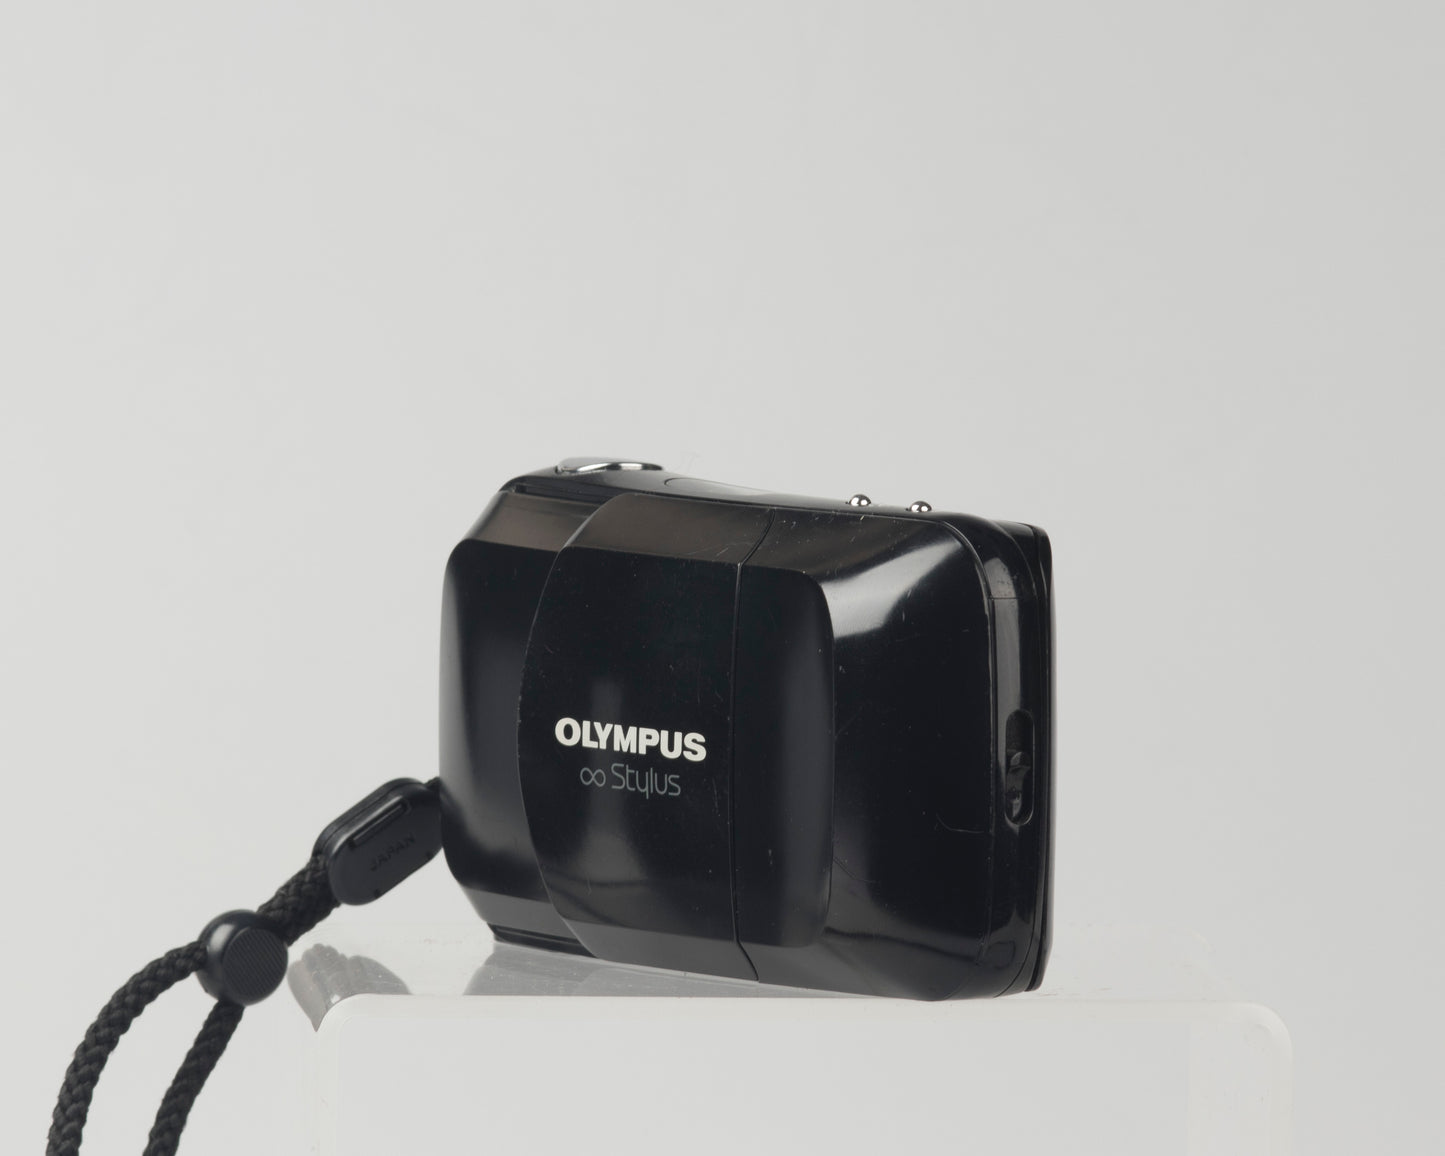 Olympus Infinity Stylus (aka mju-1) 35mm film camera